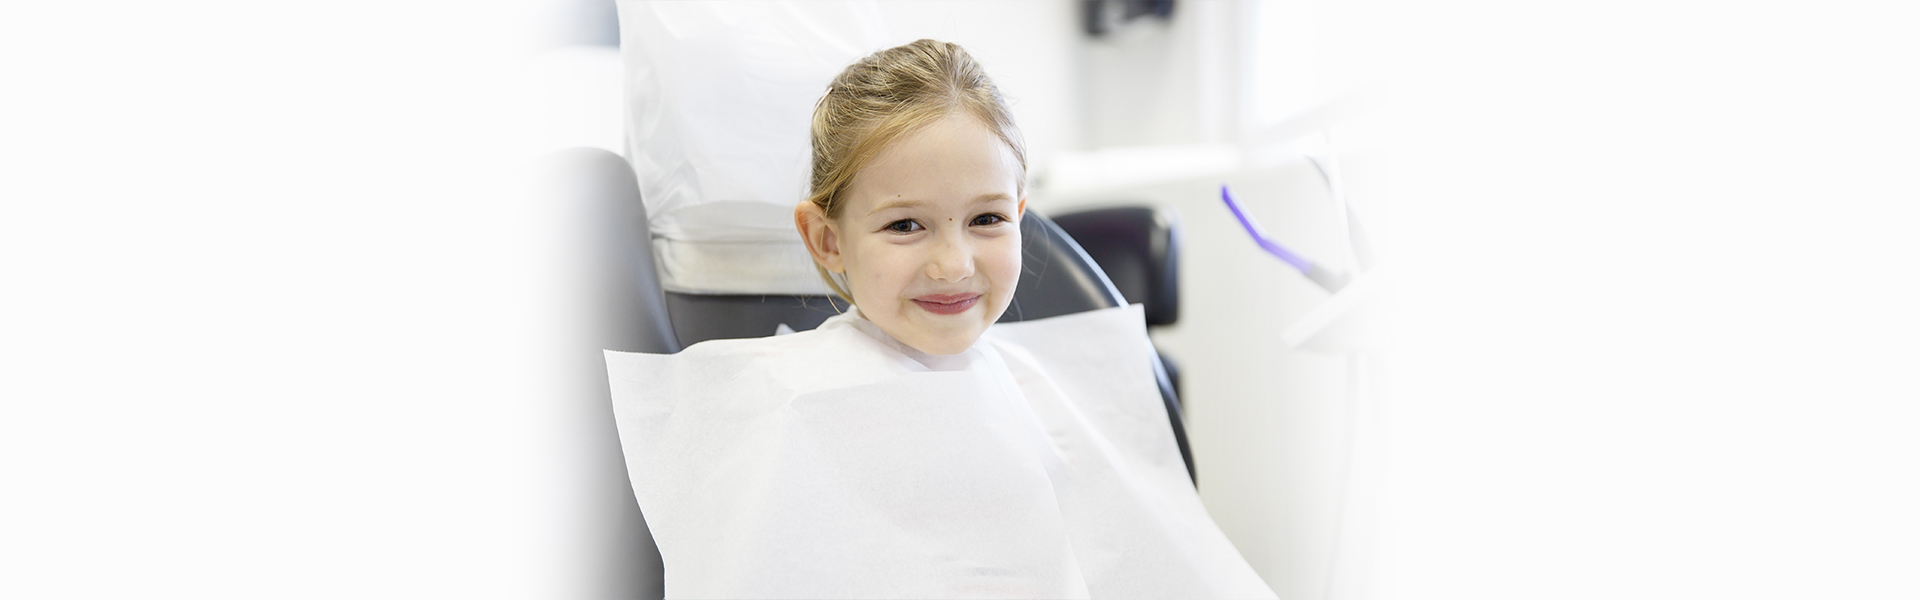 Importance of Dental Fillings for Children’s Teeth